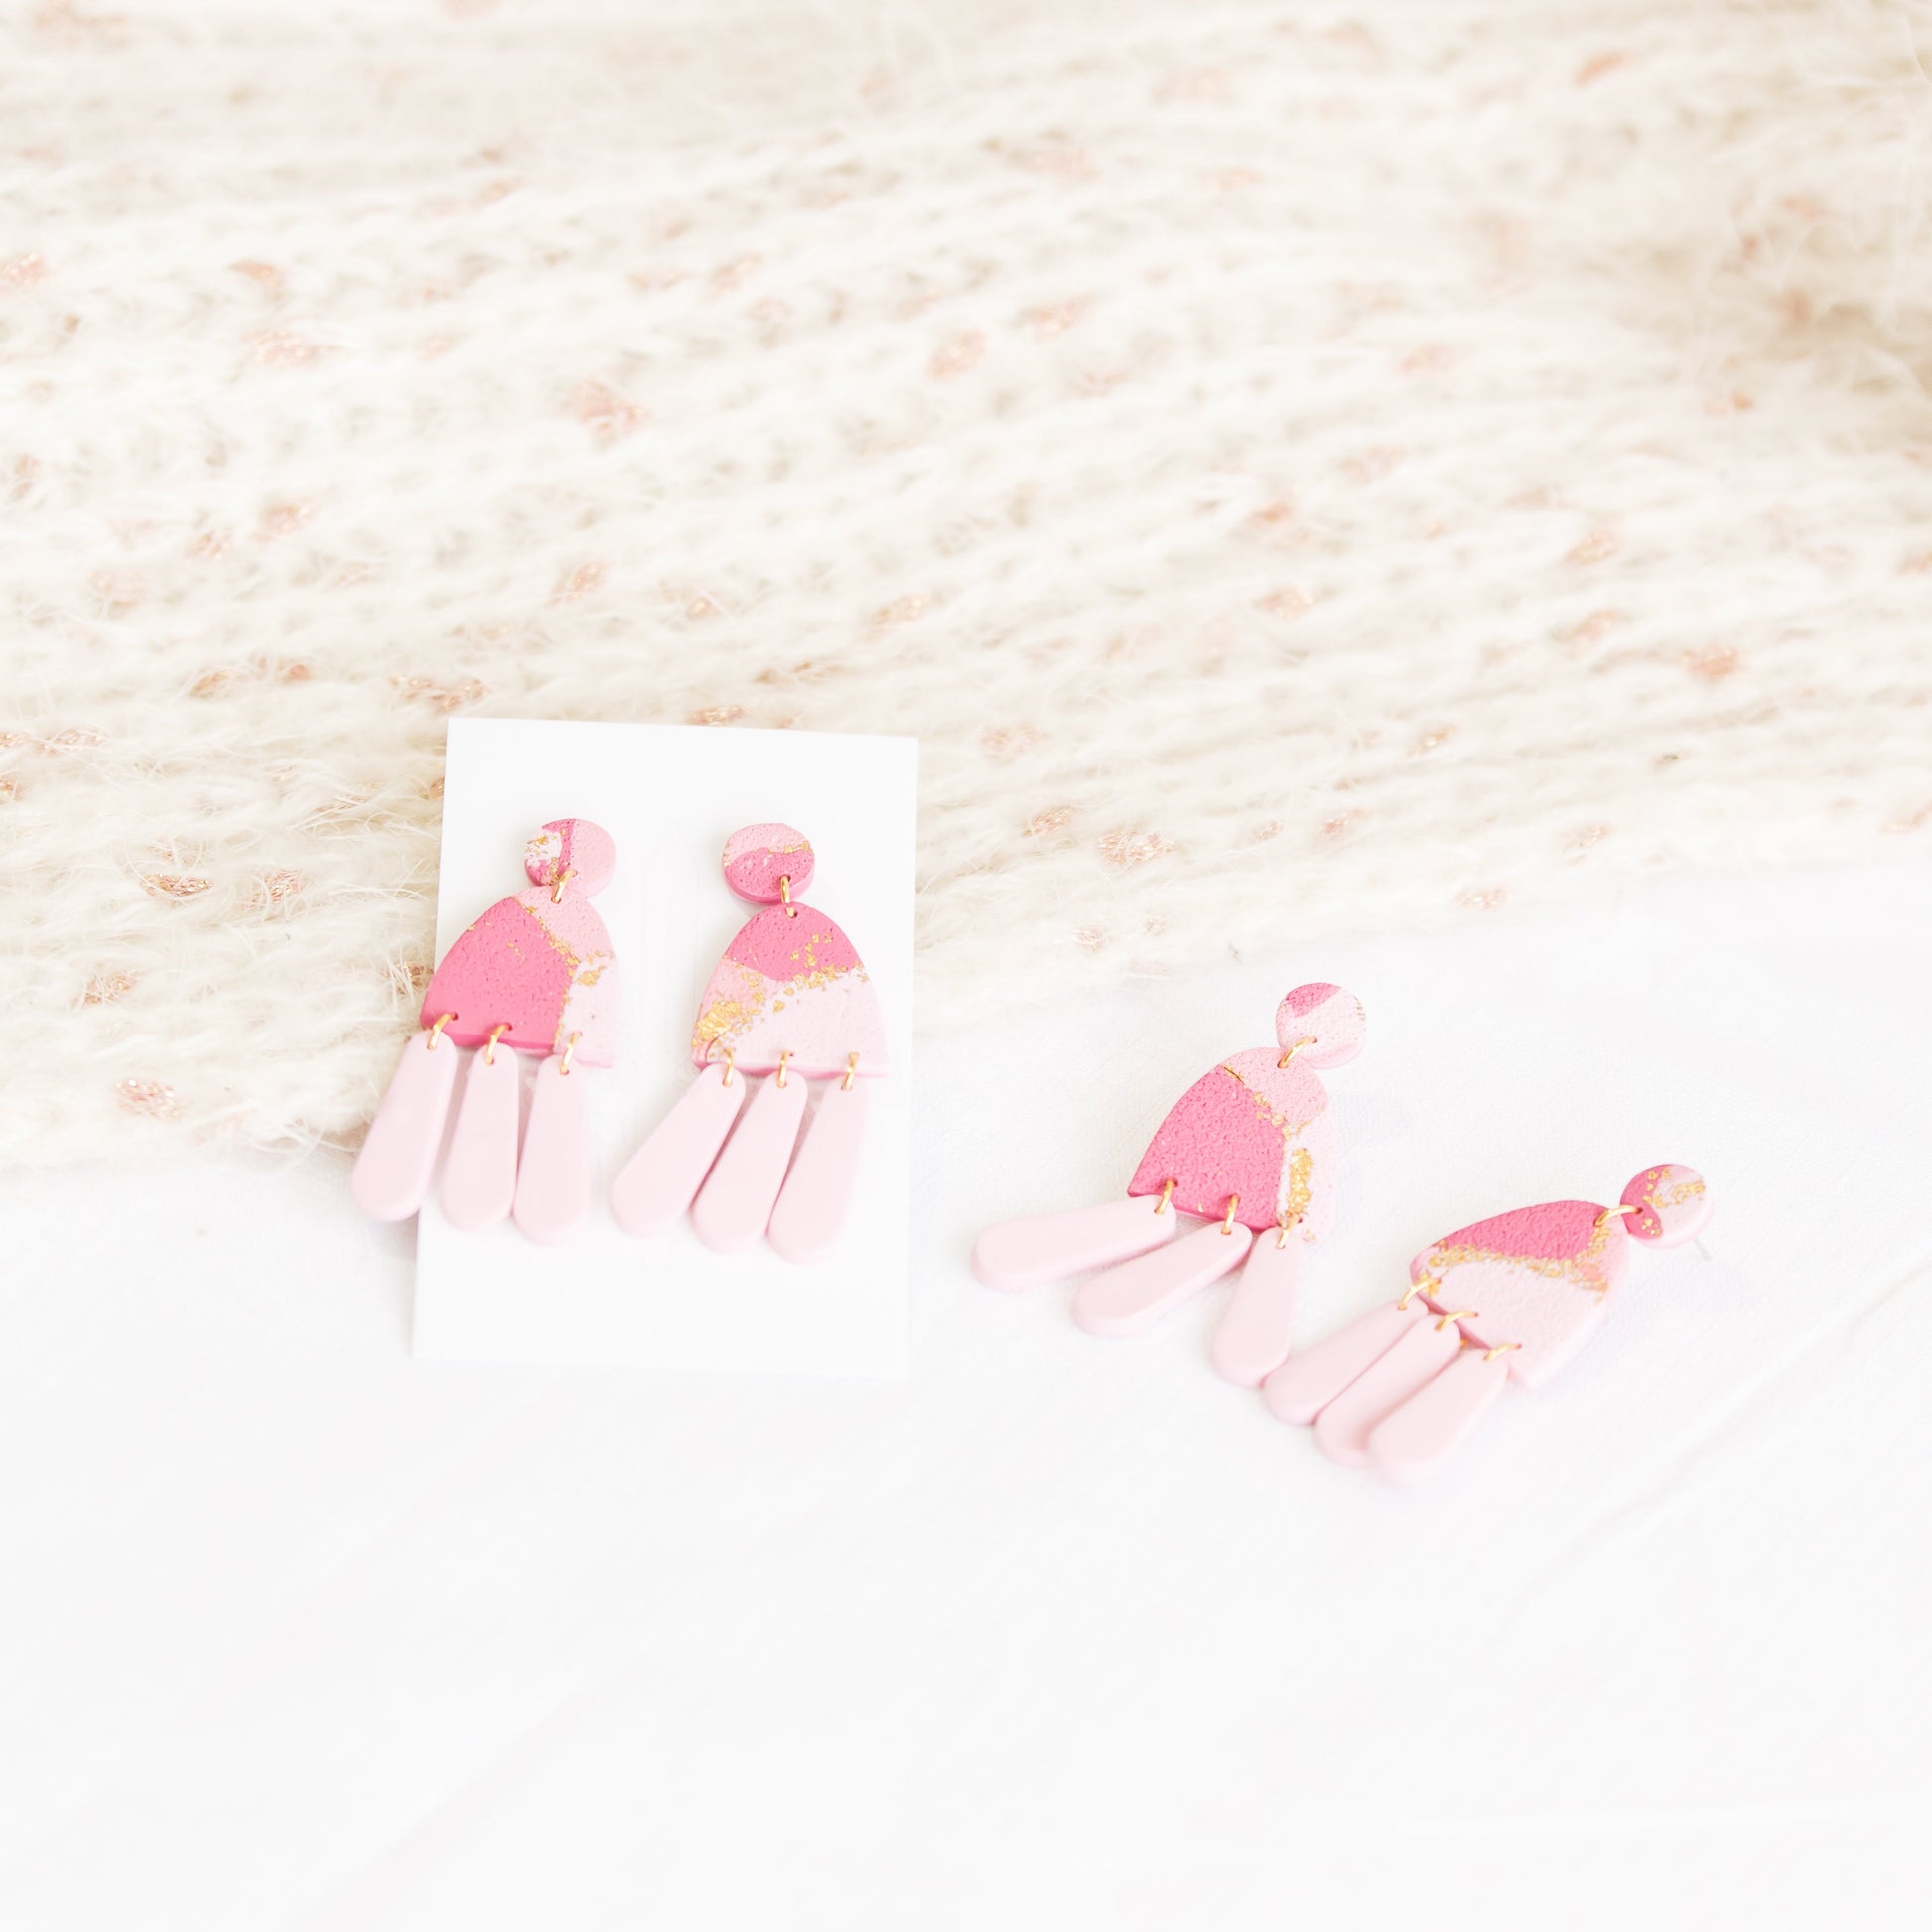 Pink Textured Jellyfish Earrings - Claymore NZ - Earrings